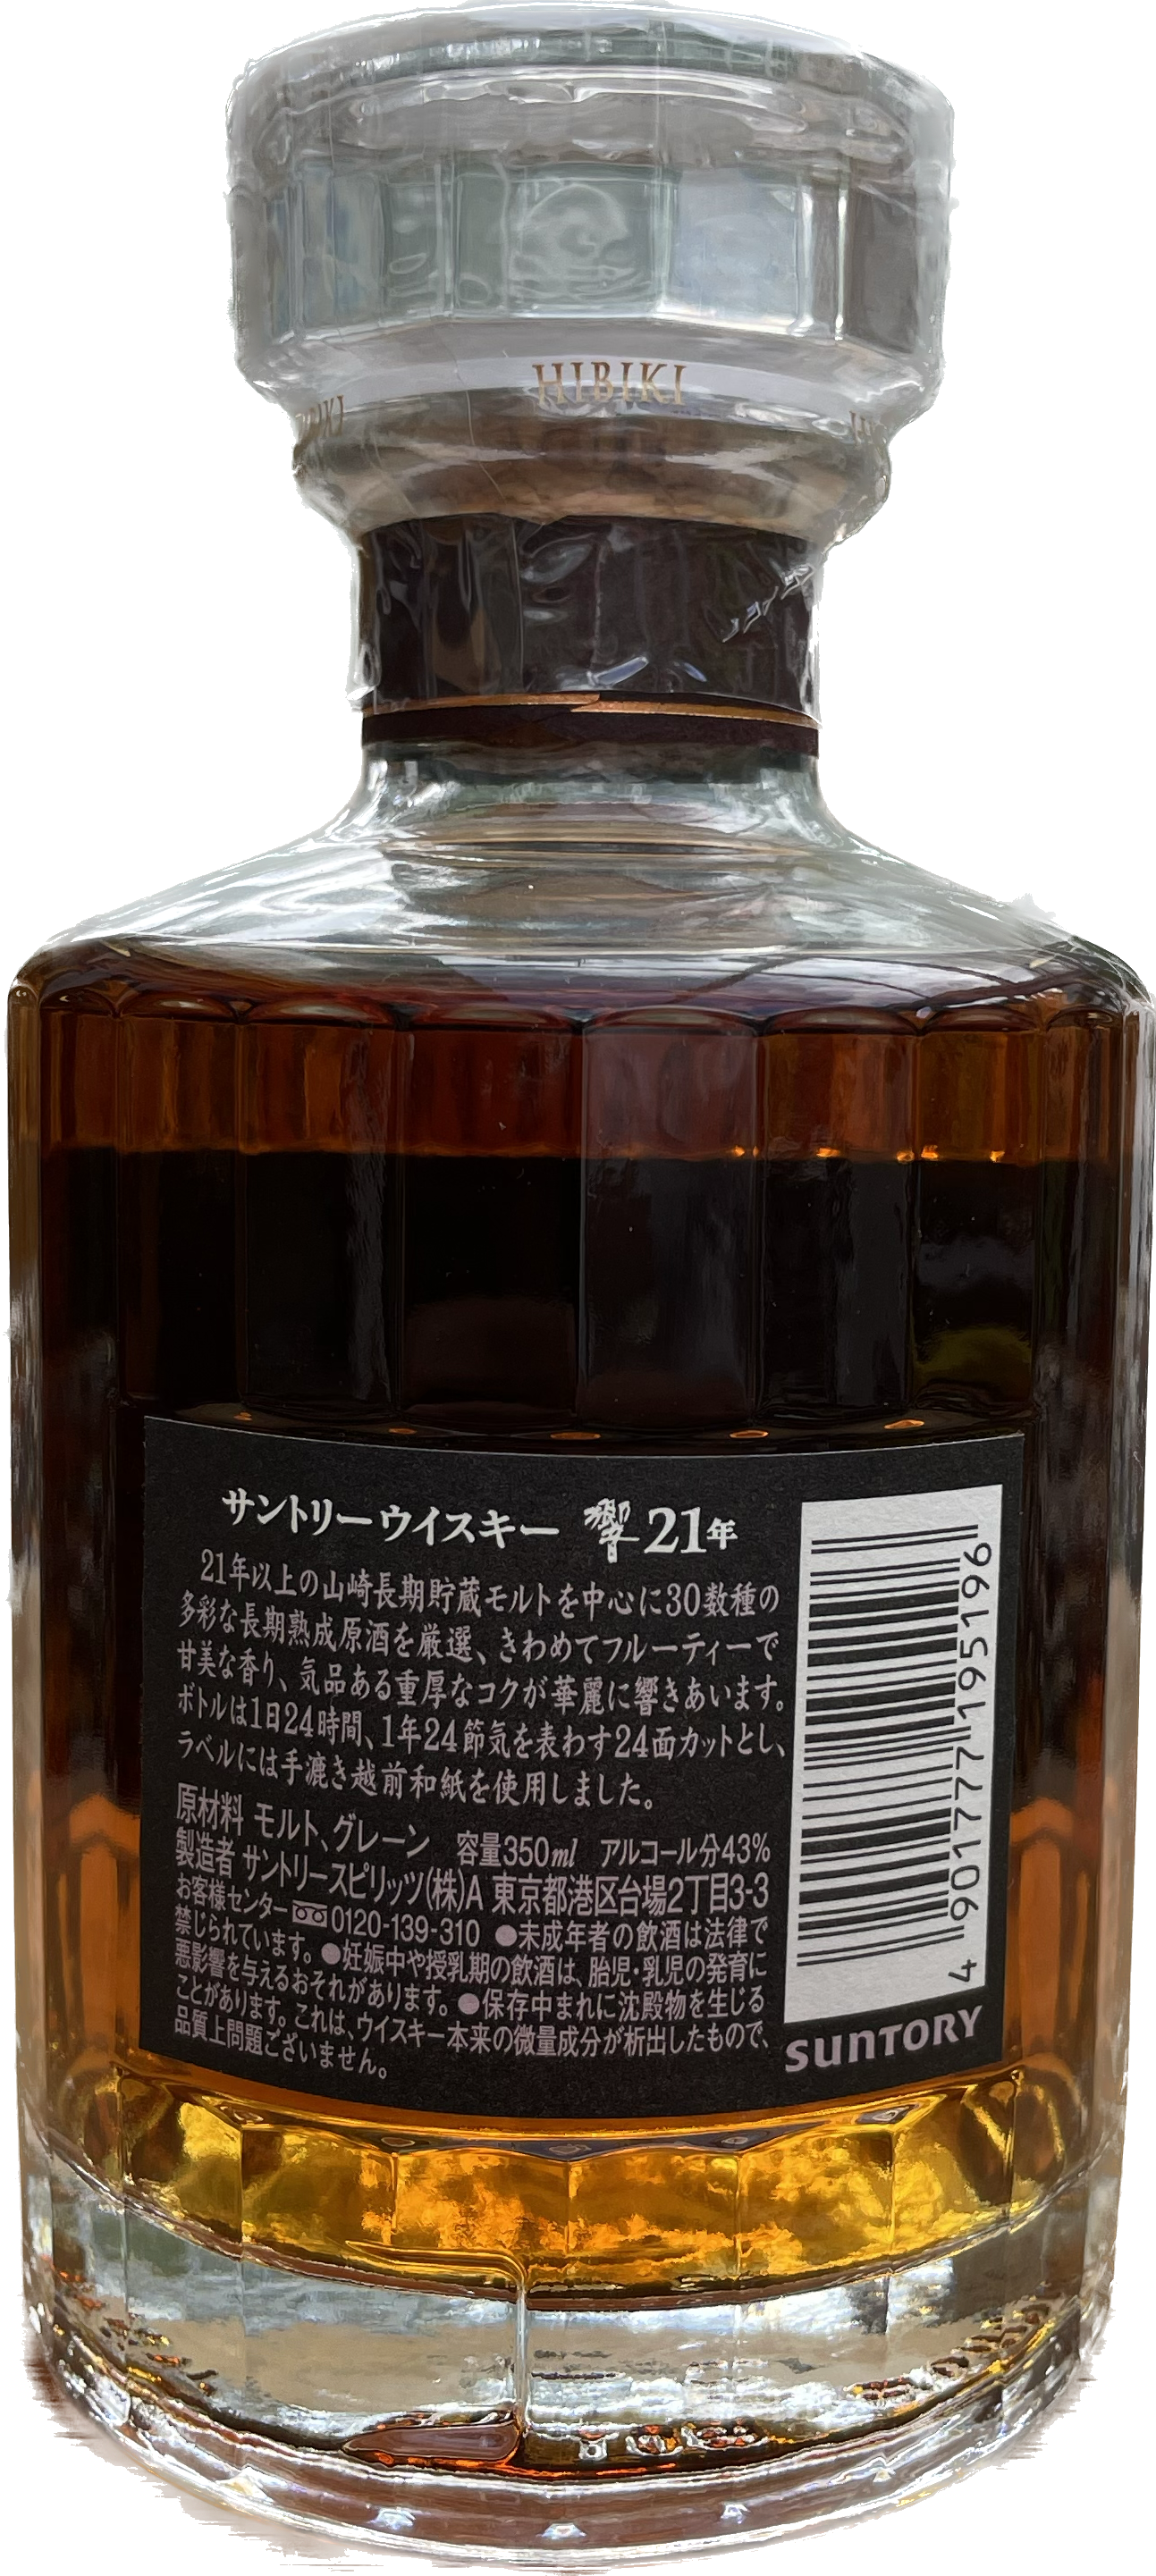 Hibiki 21 Jahre Suntory Whisky 0,35